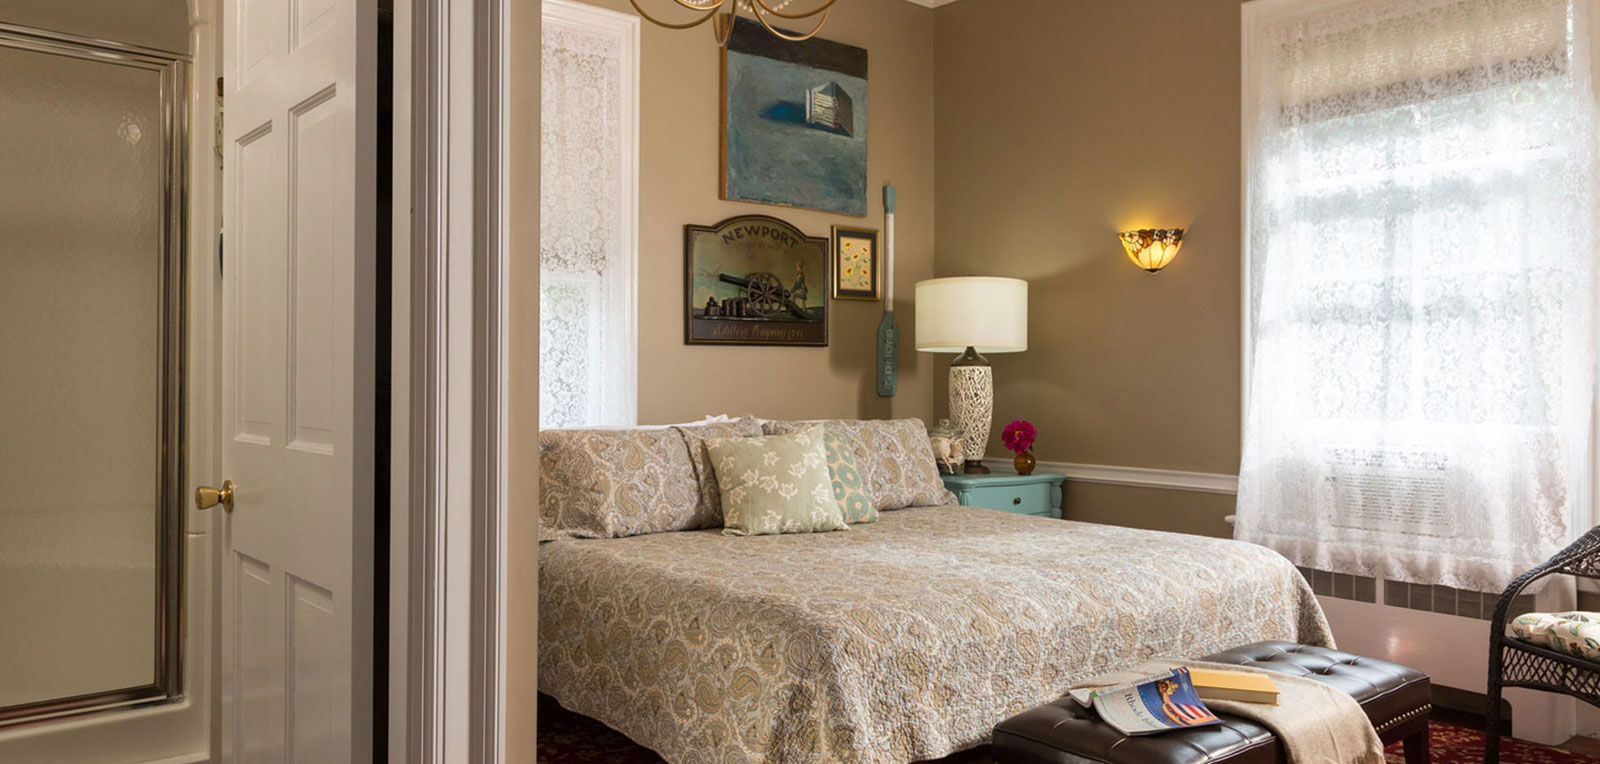 King Private Bath Bedroom | ADMIRAL SIMS B&B, Newport Rhode Island